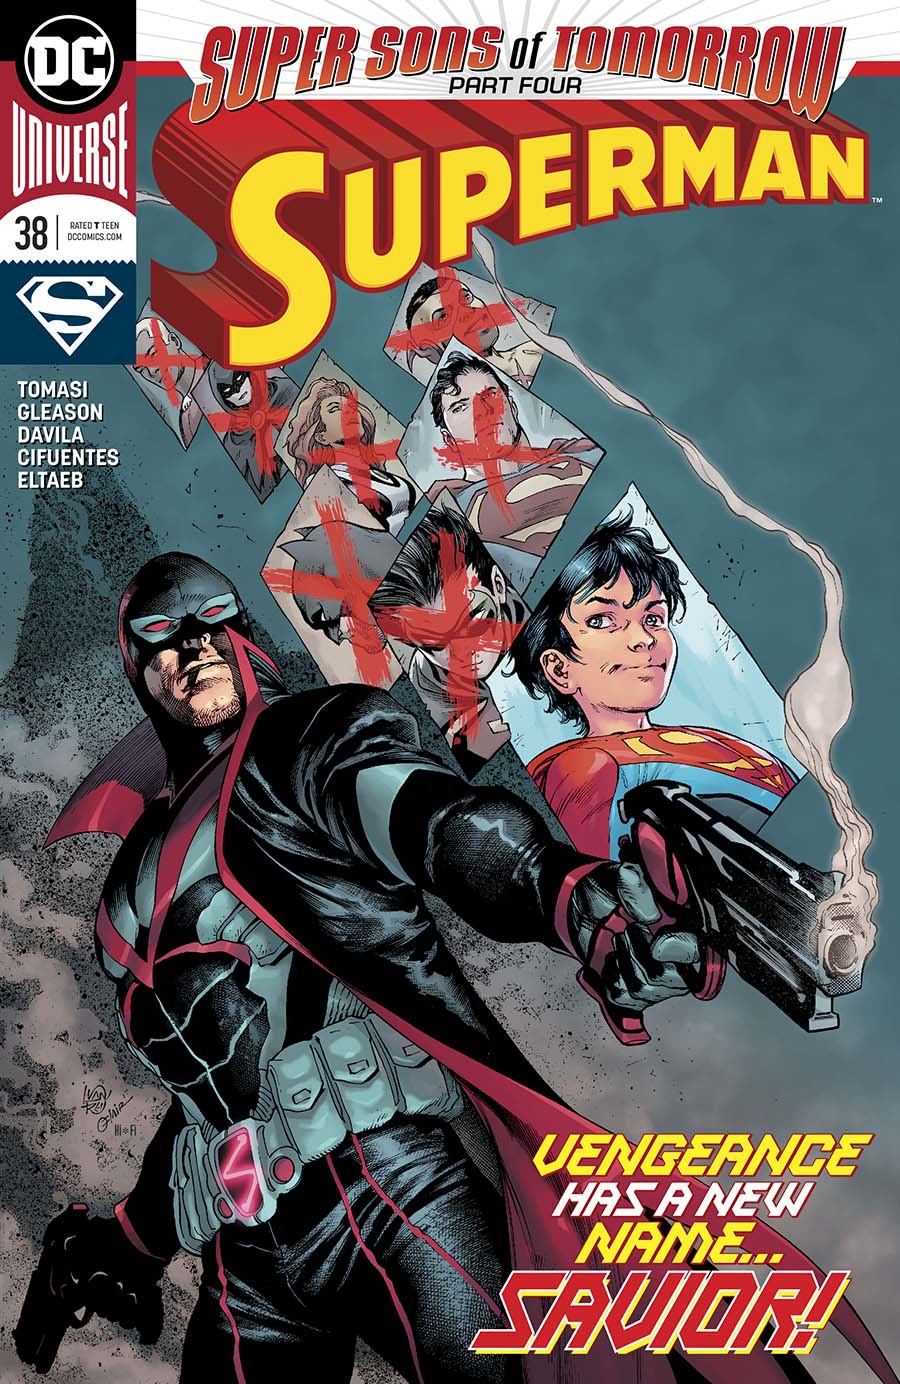 Superman Vol 5 #38 Cover A Regular Ivan Reis & Oclair Albert Cover (Super Sons Of Tomorrow Part 4)